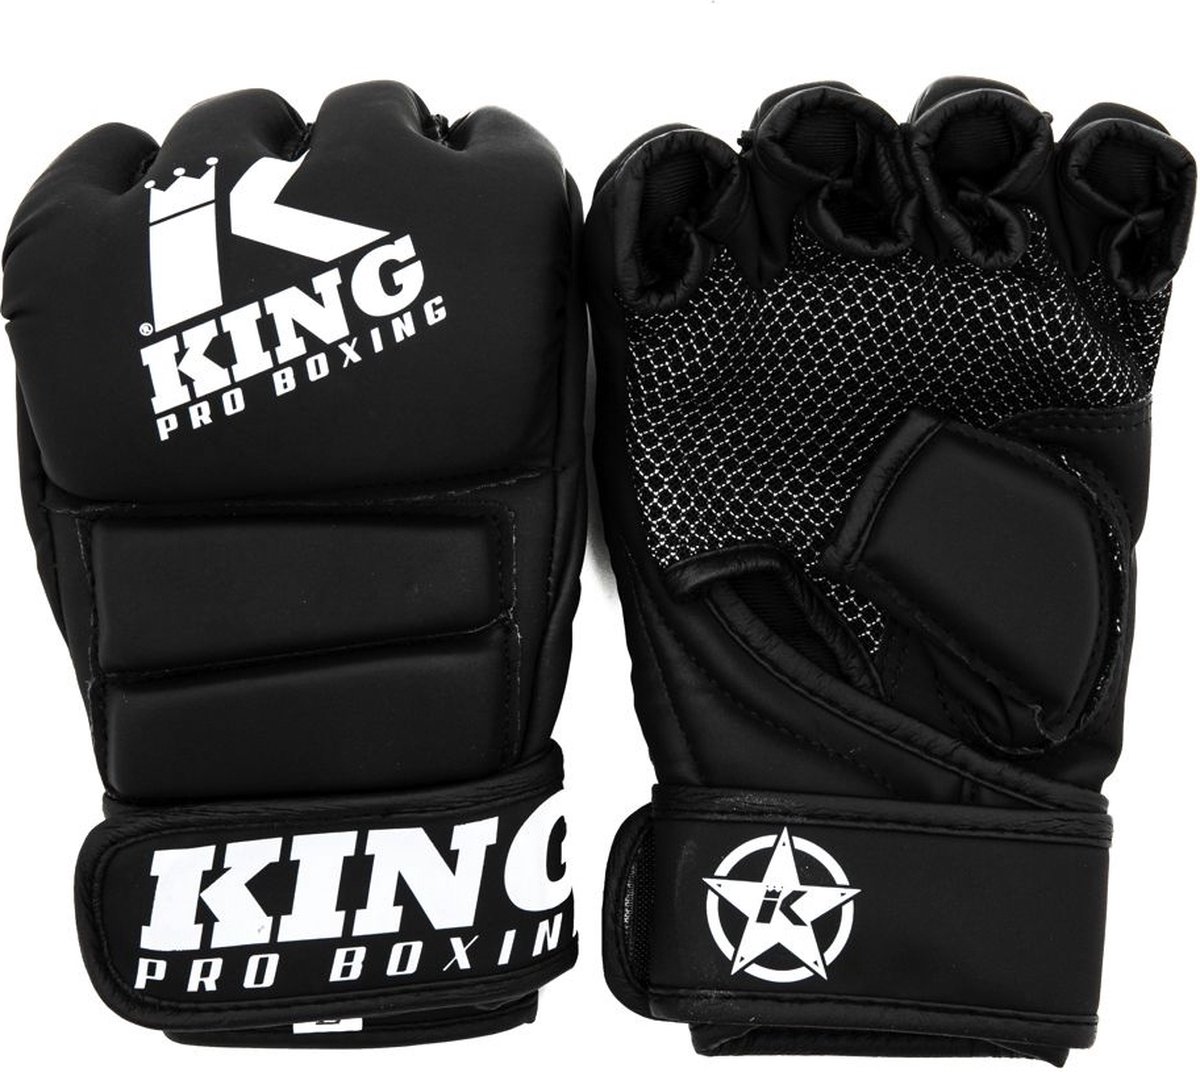 King MMA Handschoenen Revo 2 Zwart Small